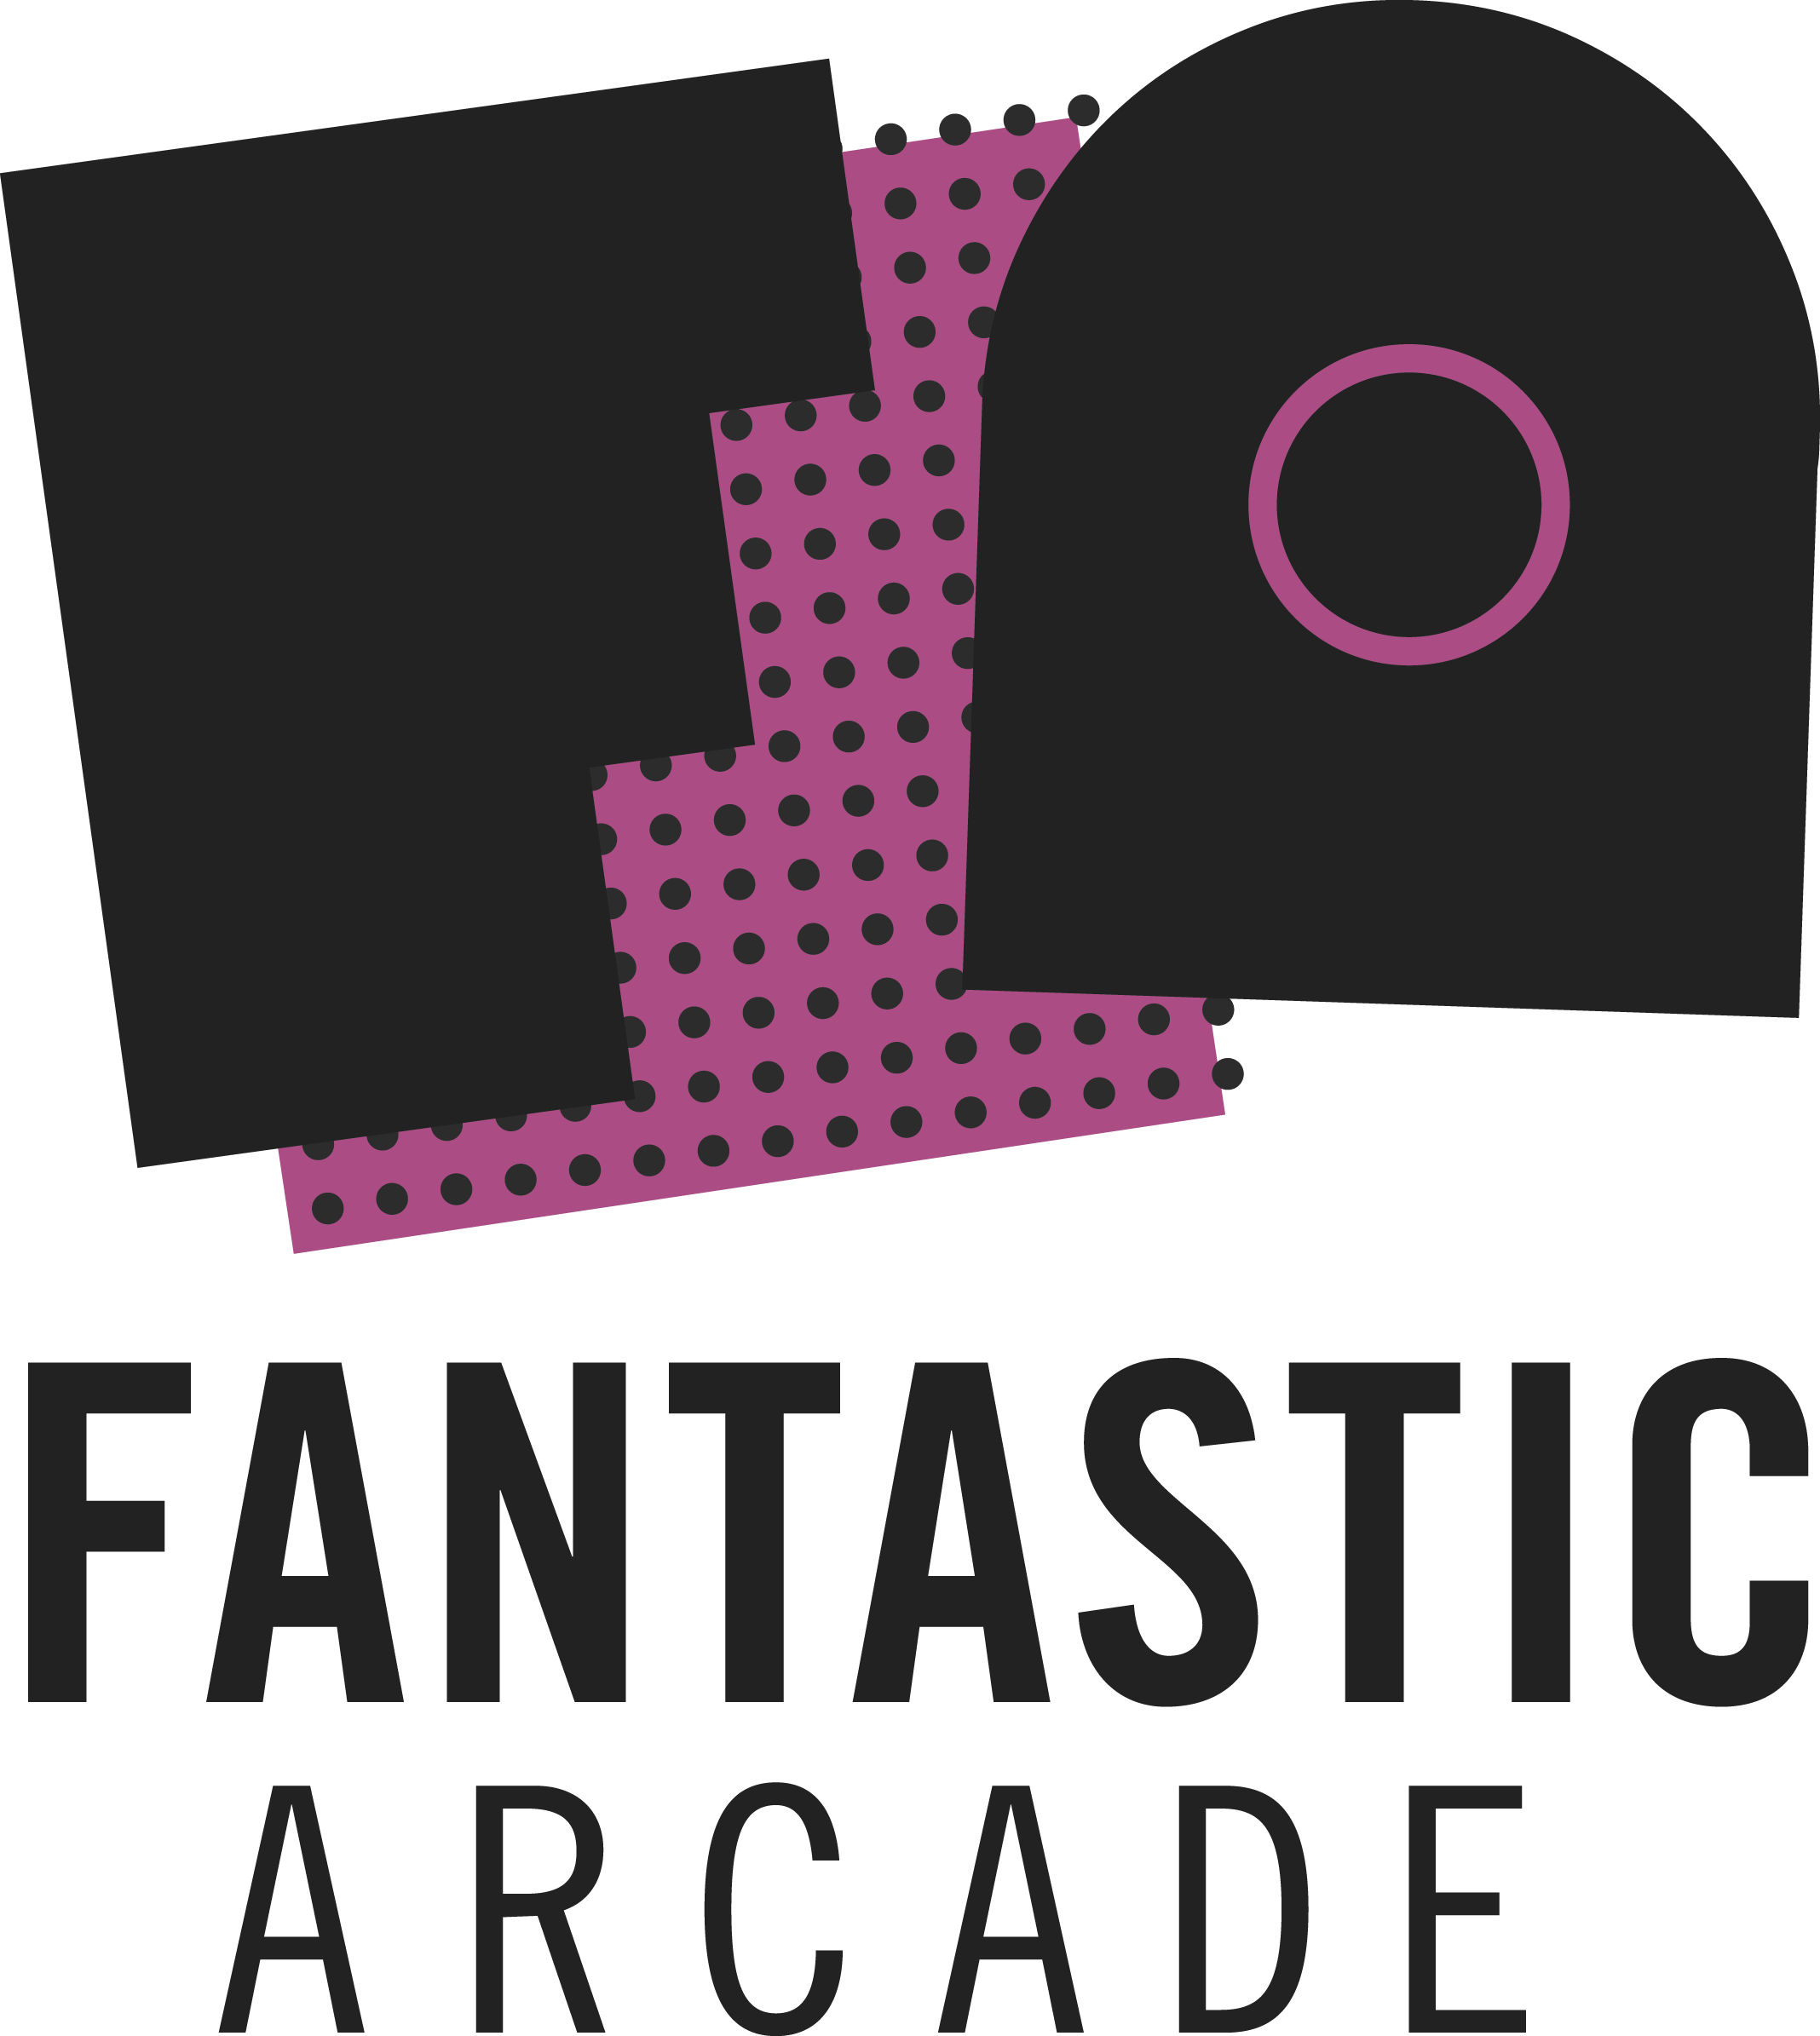 The Fantastic arcade logo